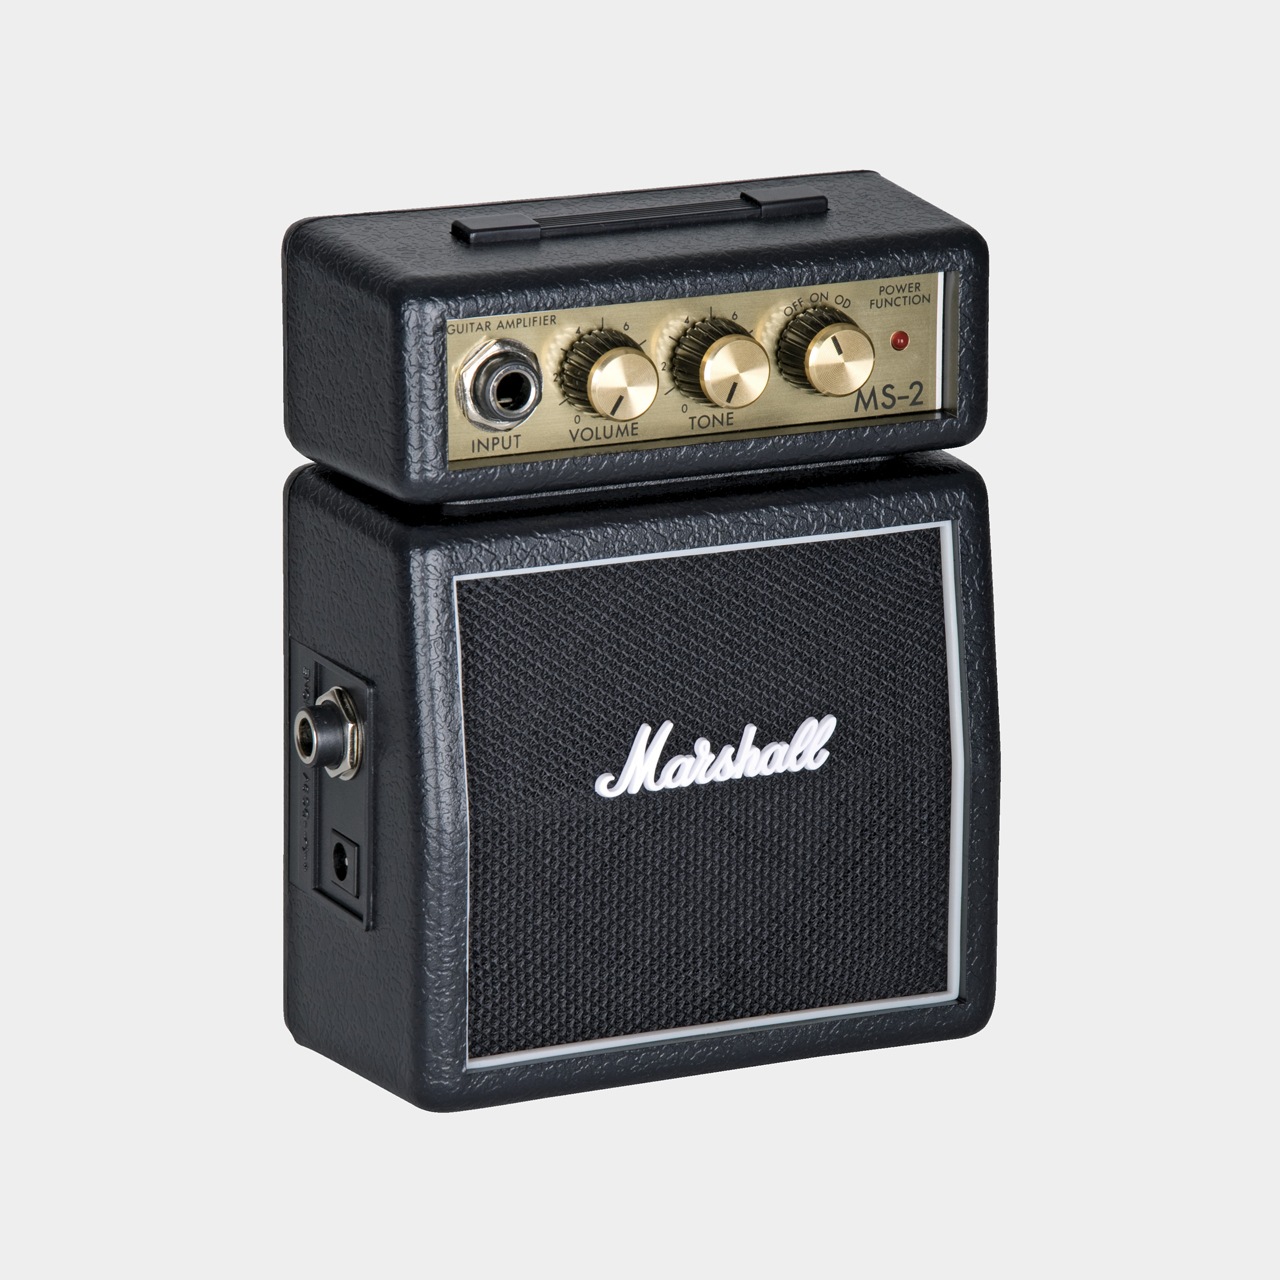 Marshall MS-2 Micro Amp noir 2 Watt, alim. piles, sortie casque | MUSIC  STORE professional